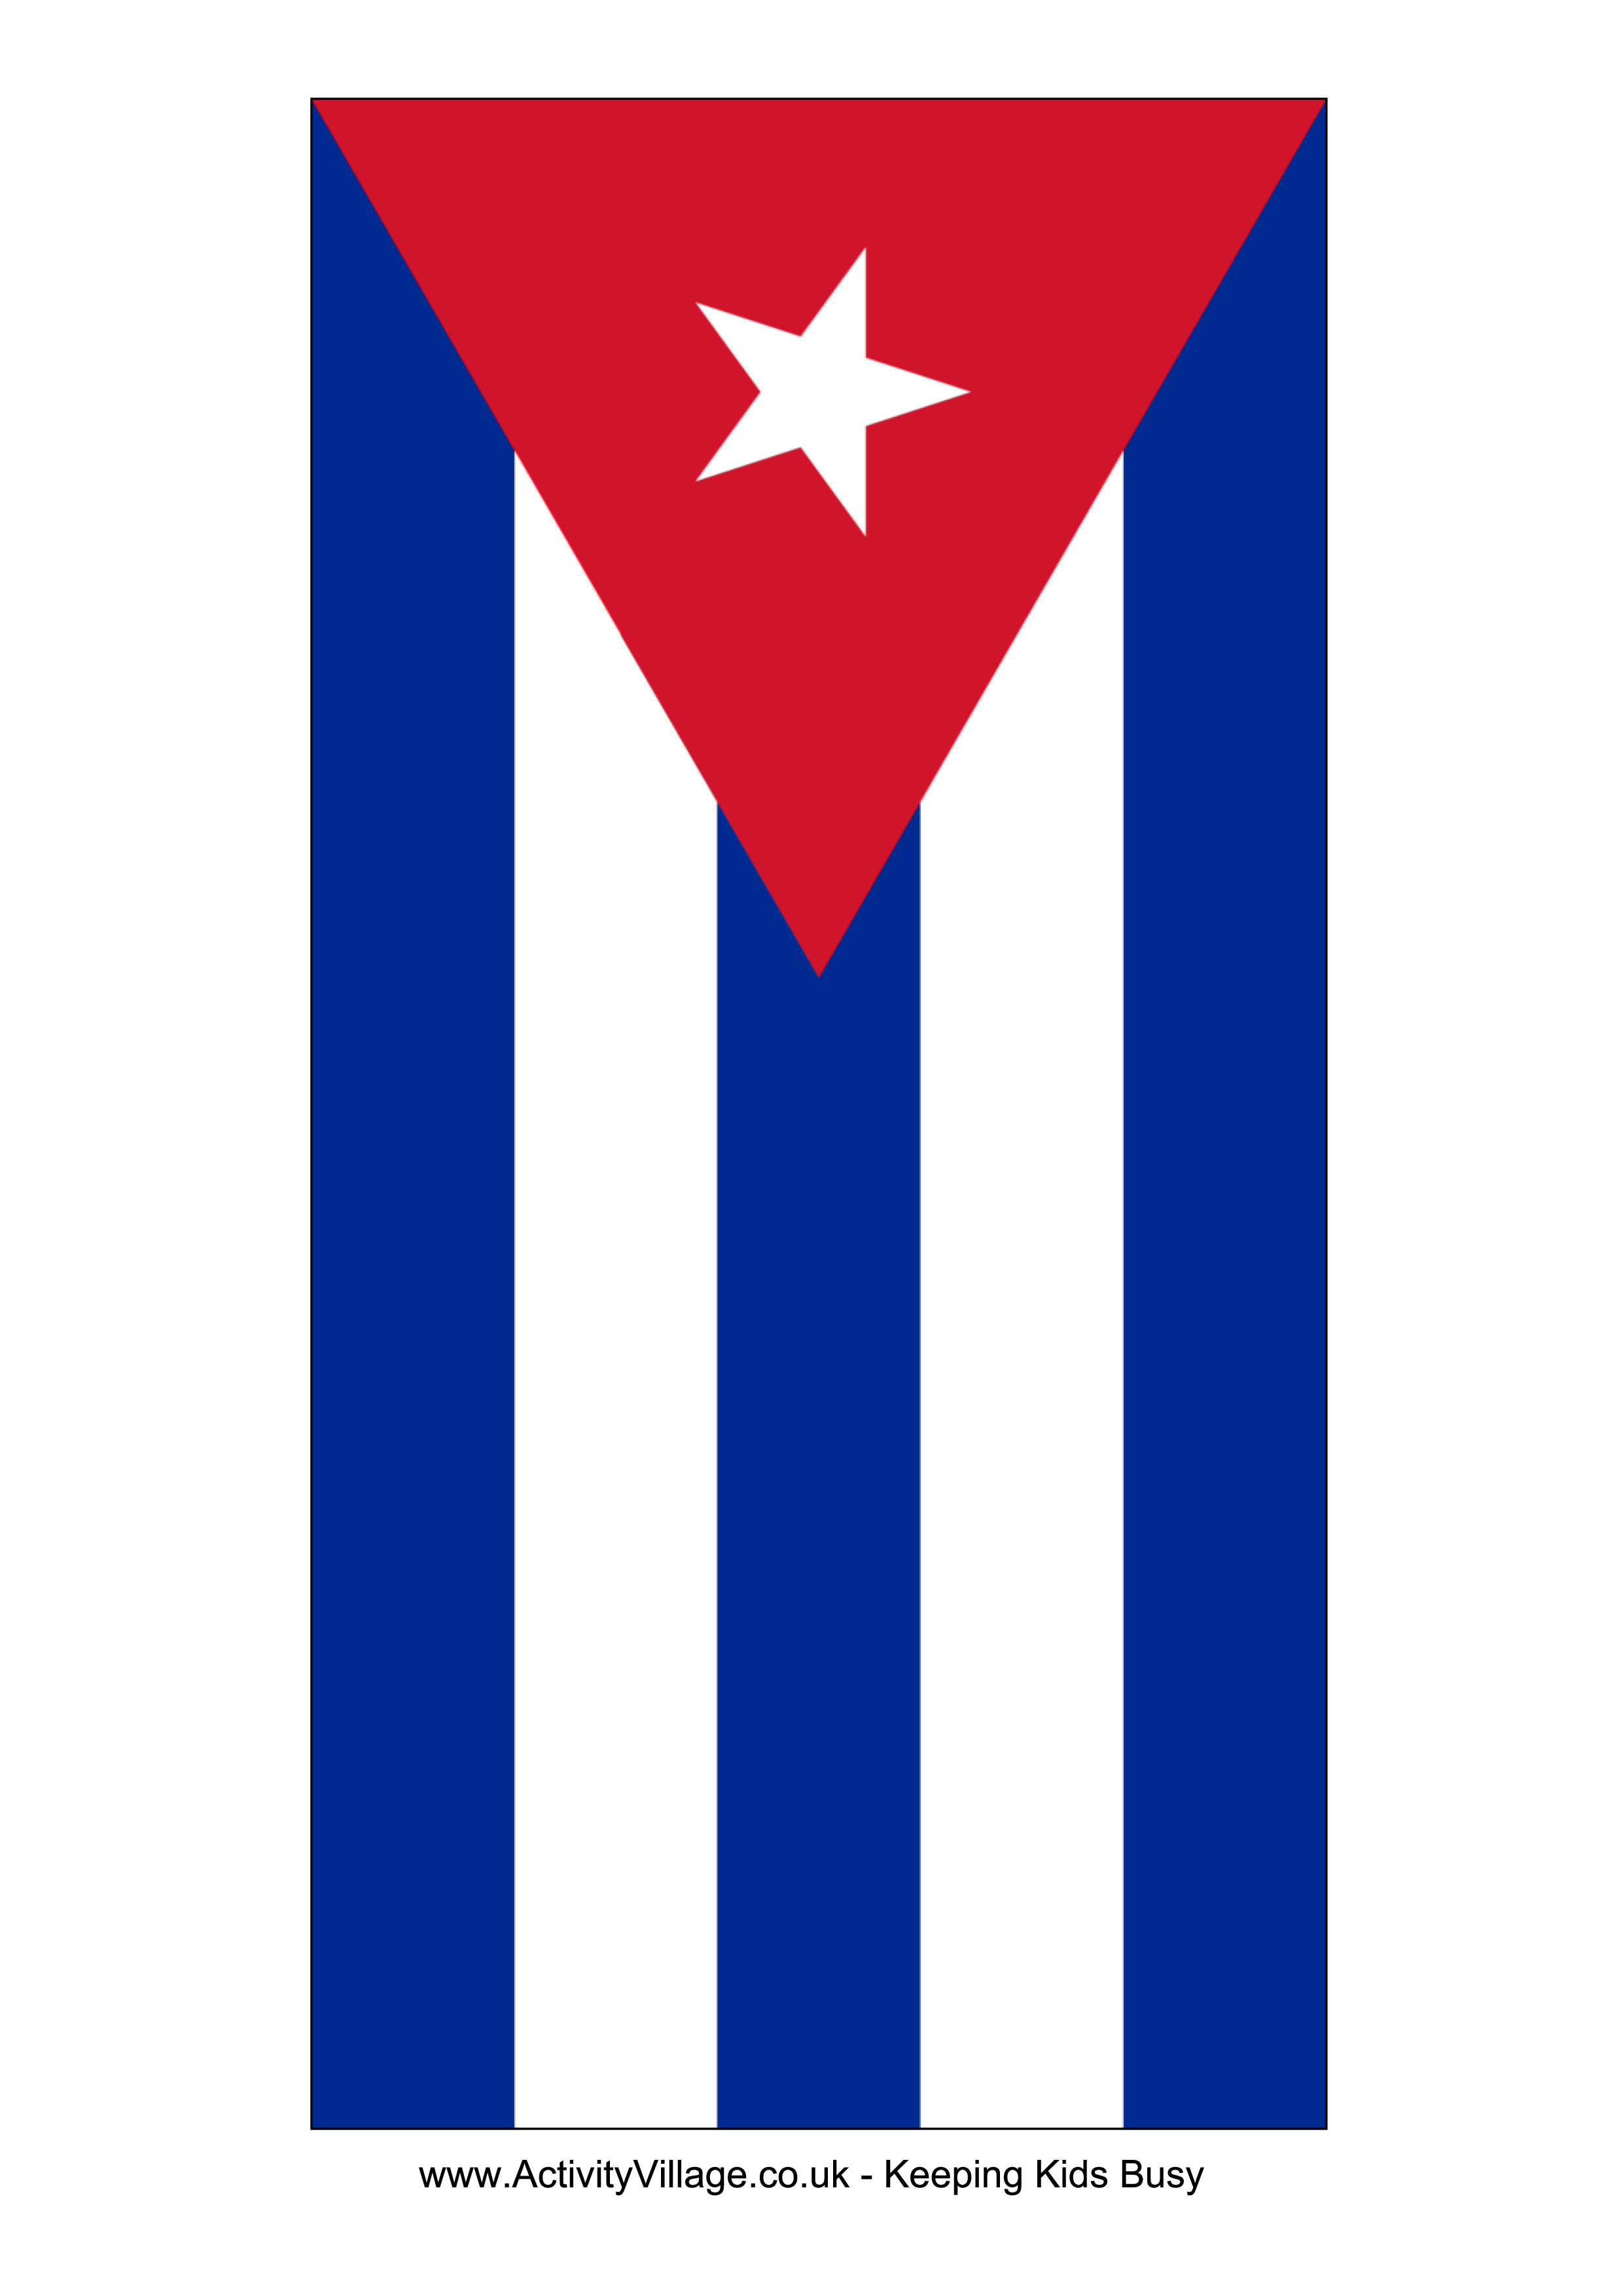 Cuba Flag Templates at